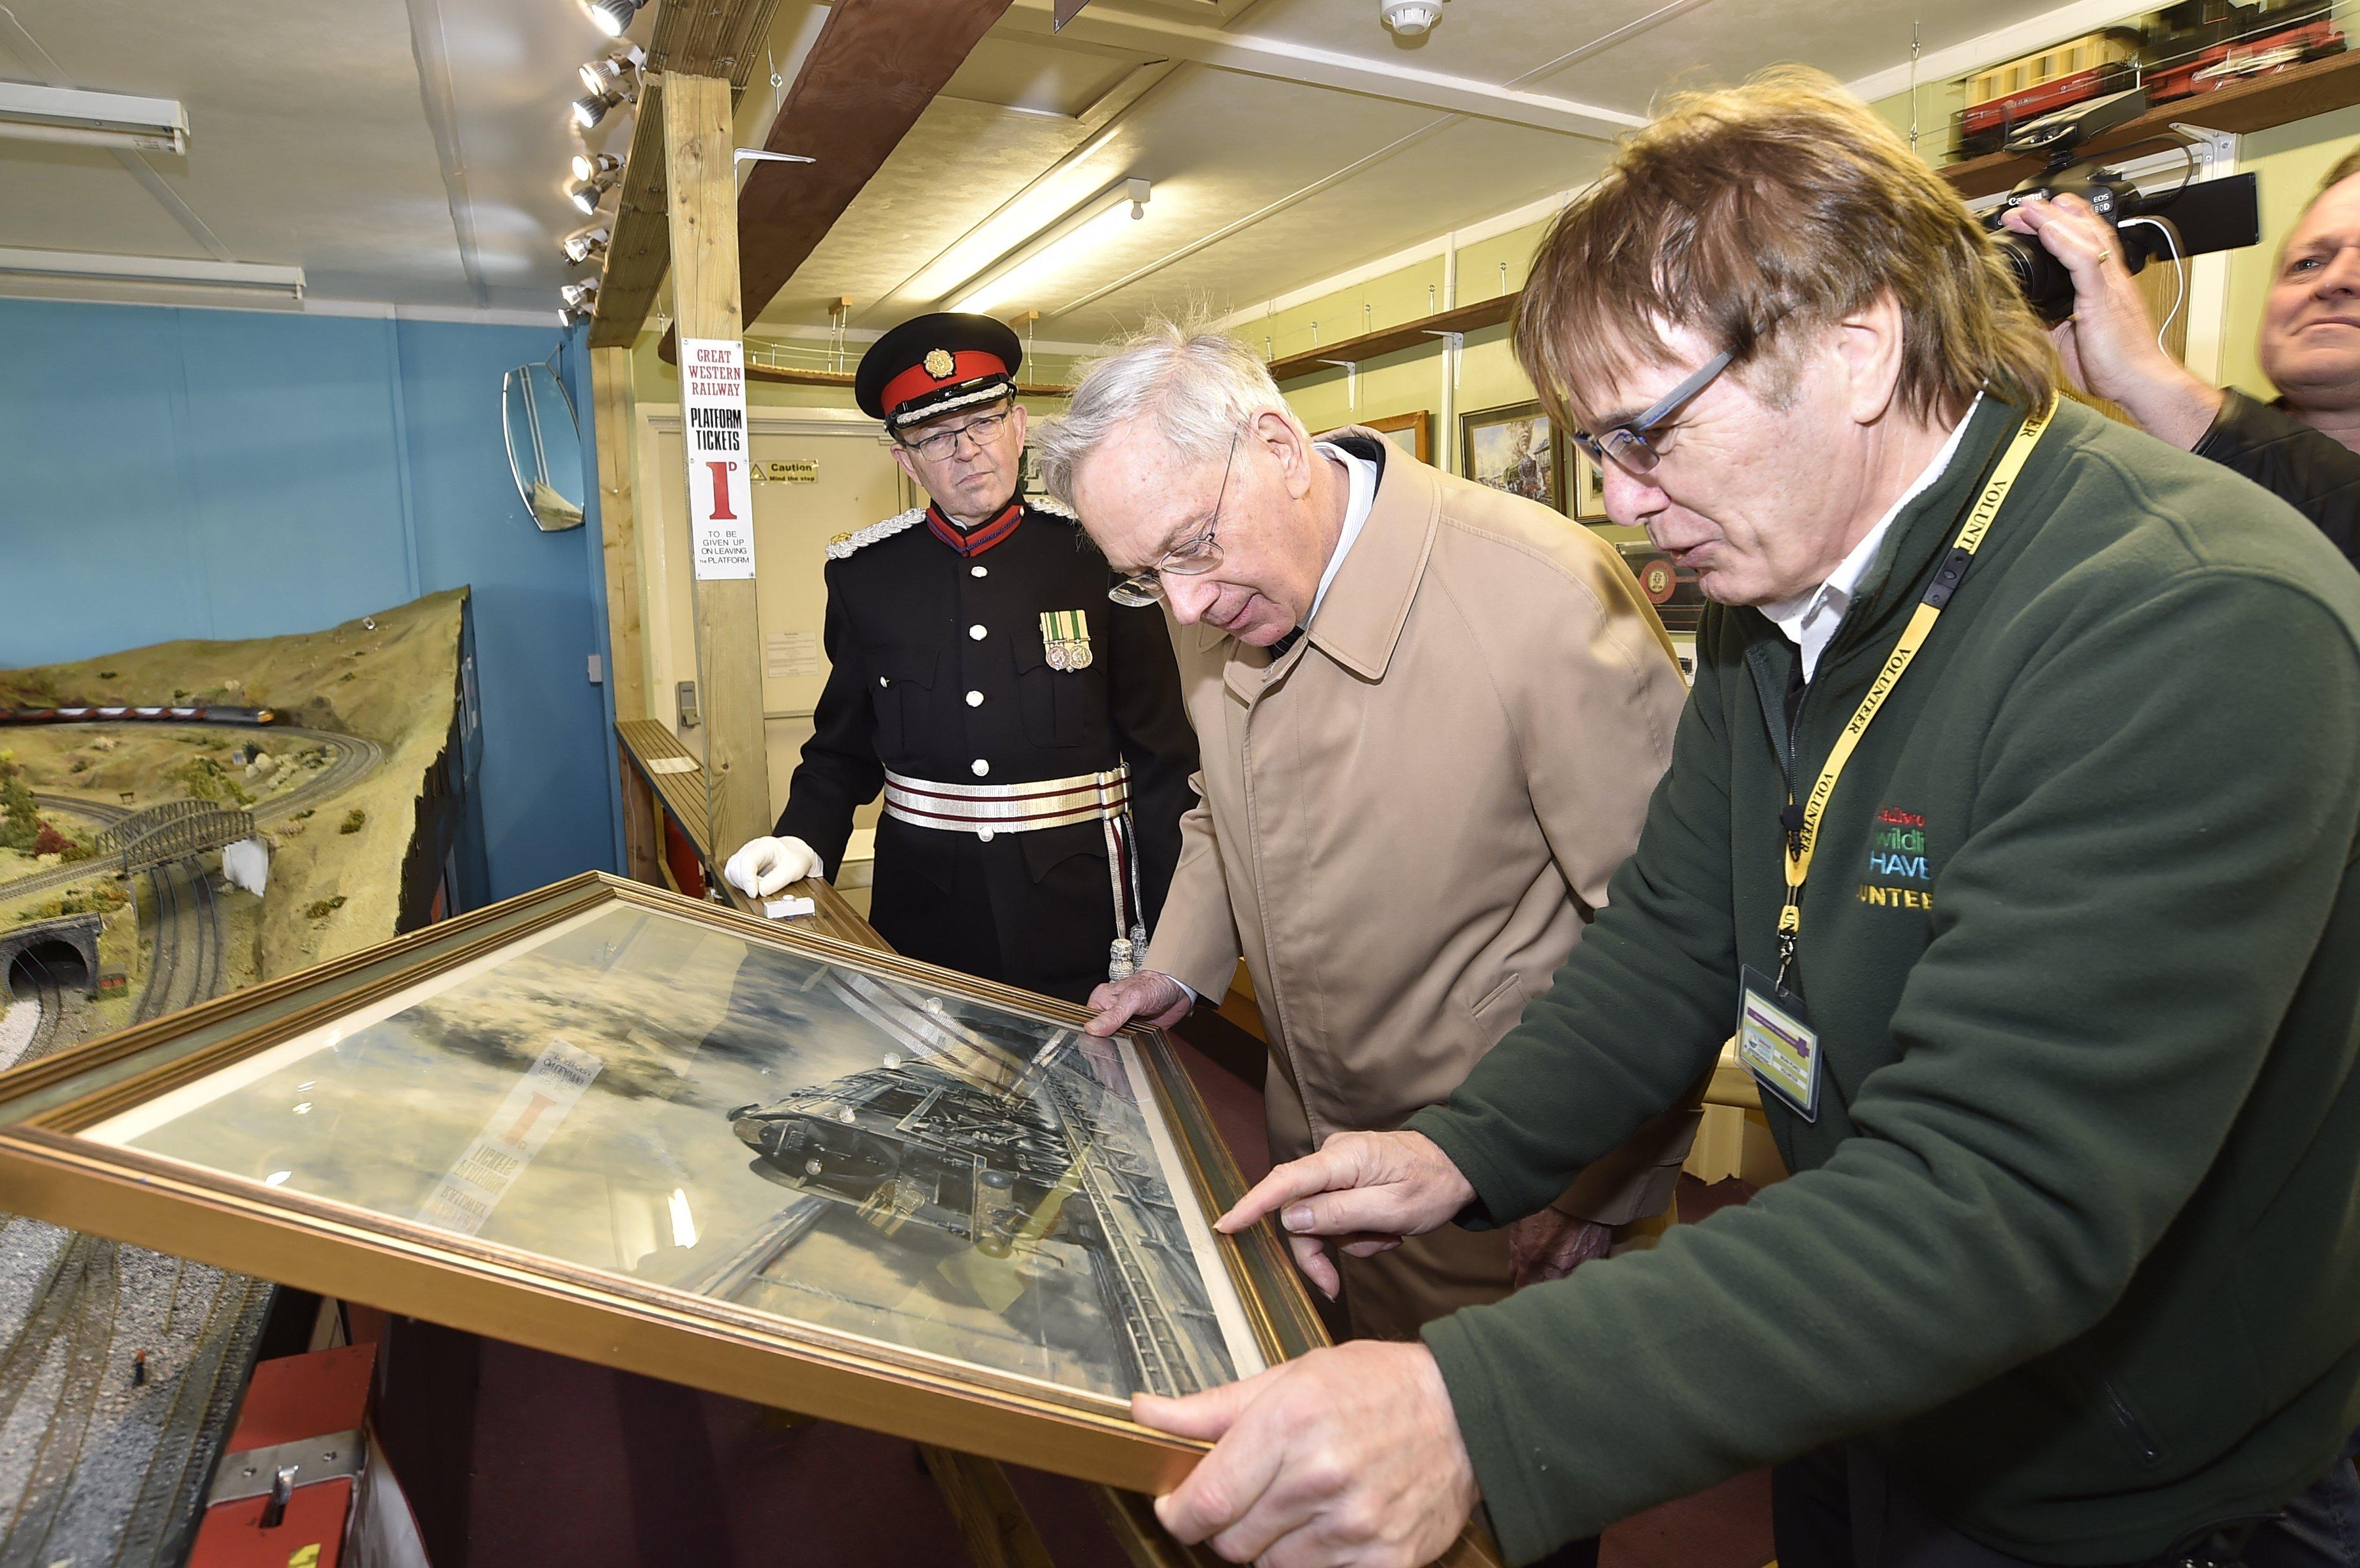 Duke of Gloucester visits Railworld in Peterborough EMN-200227-174133009